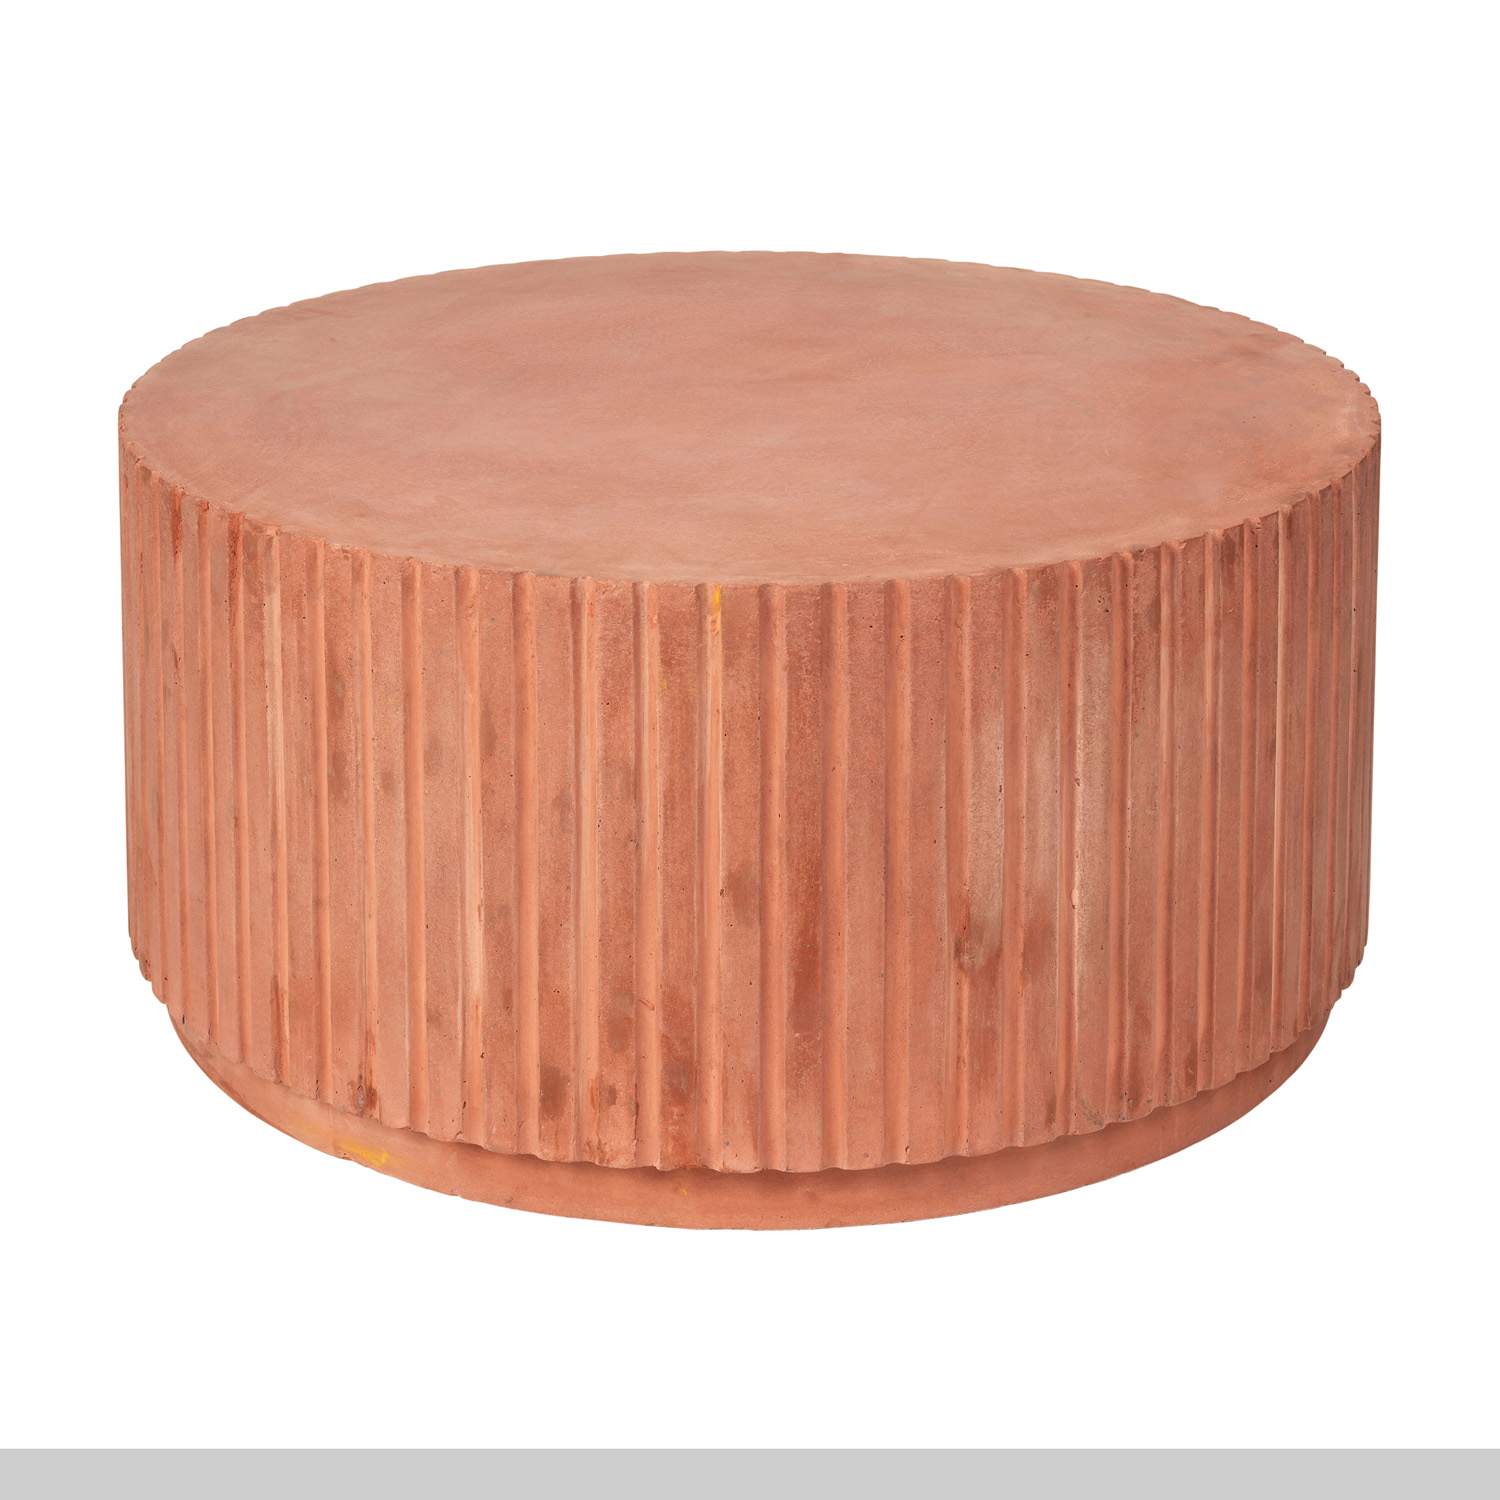 6: BROSTE COPENHAGEN Rillo sofabord, rund - terracotta fibercement (Ø75)